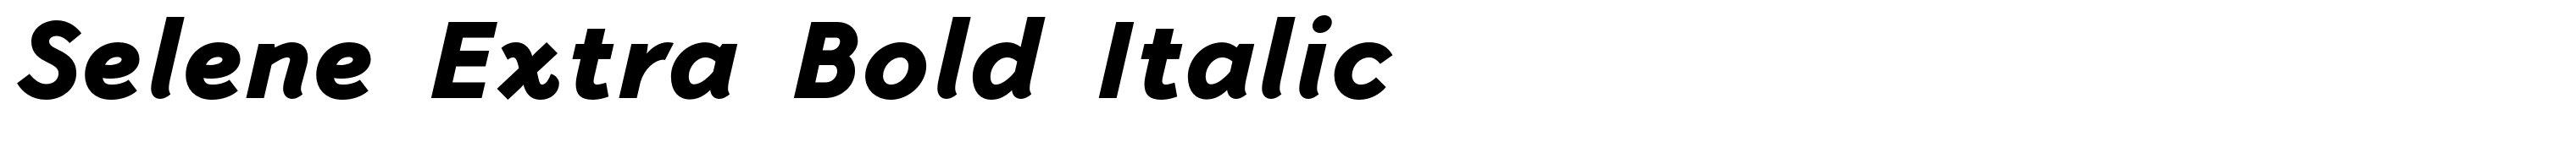 Selene Extra Bold Italic